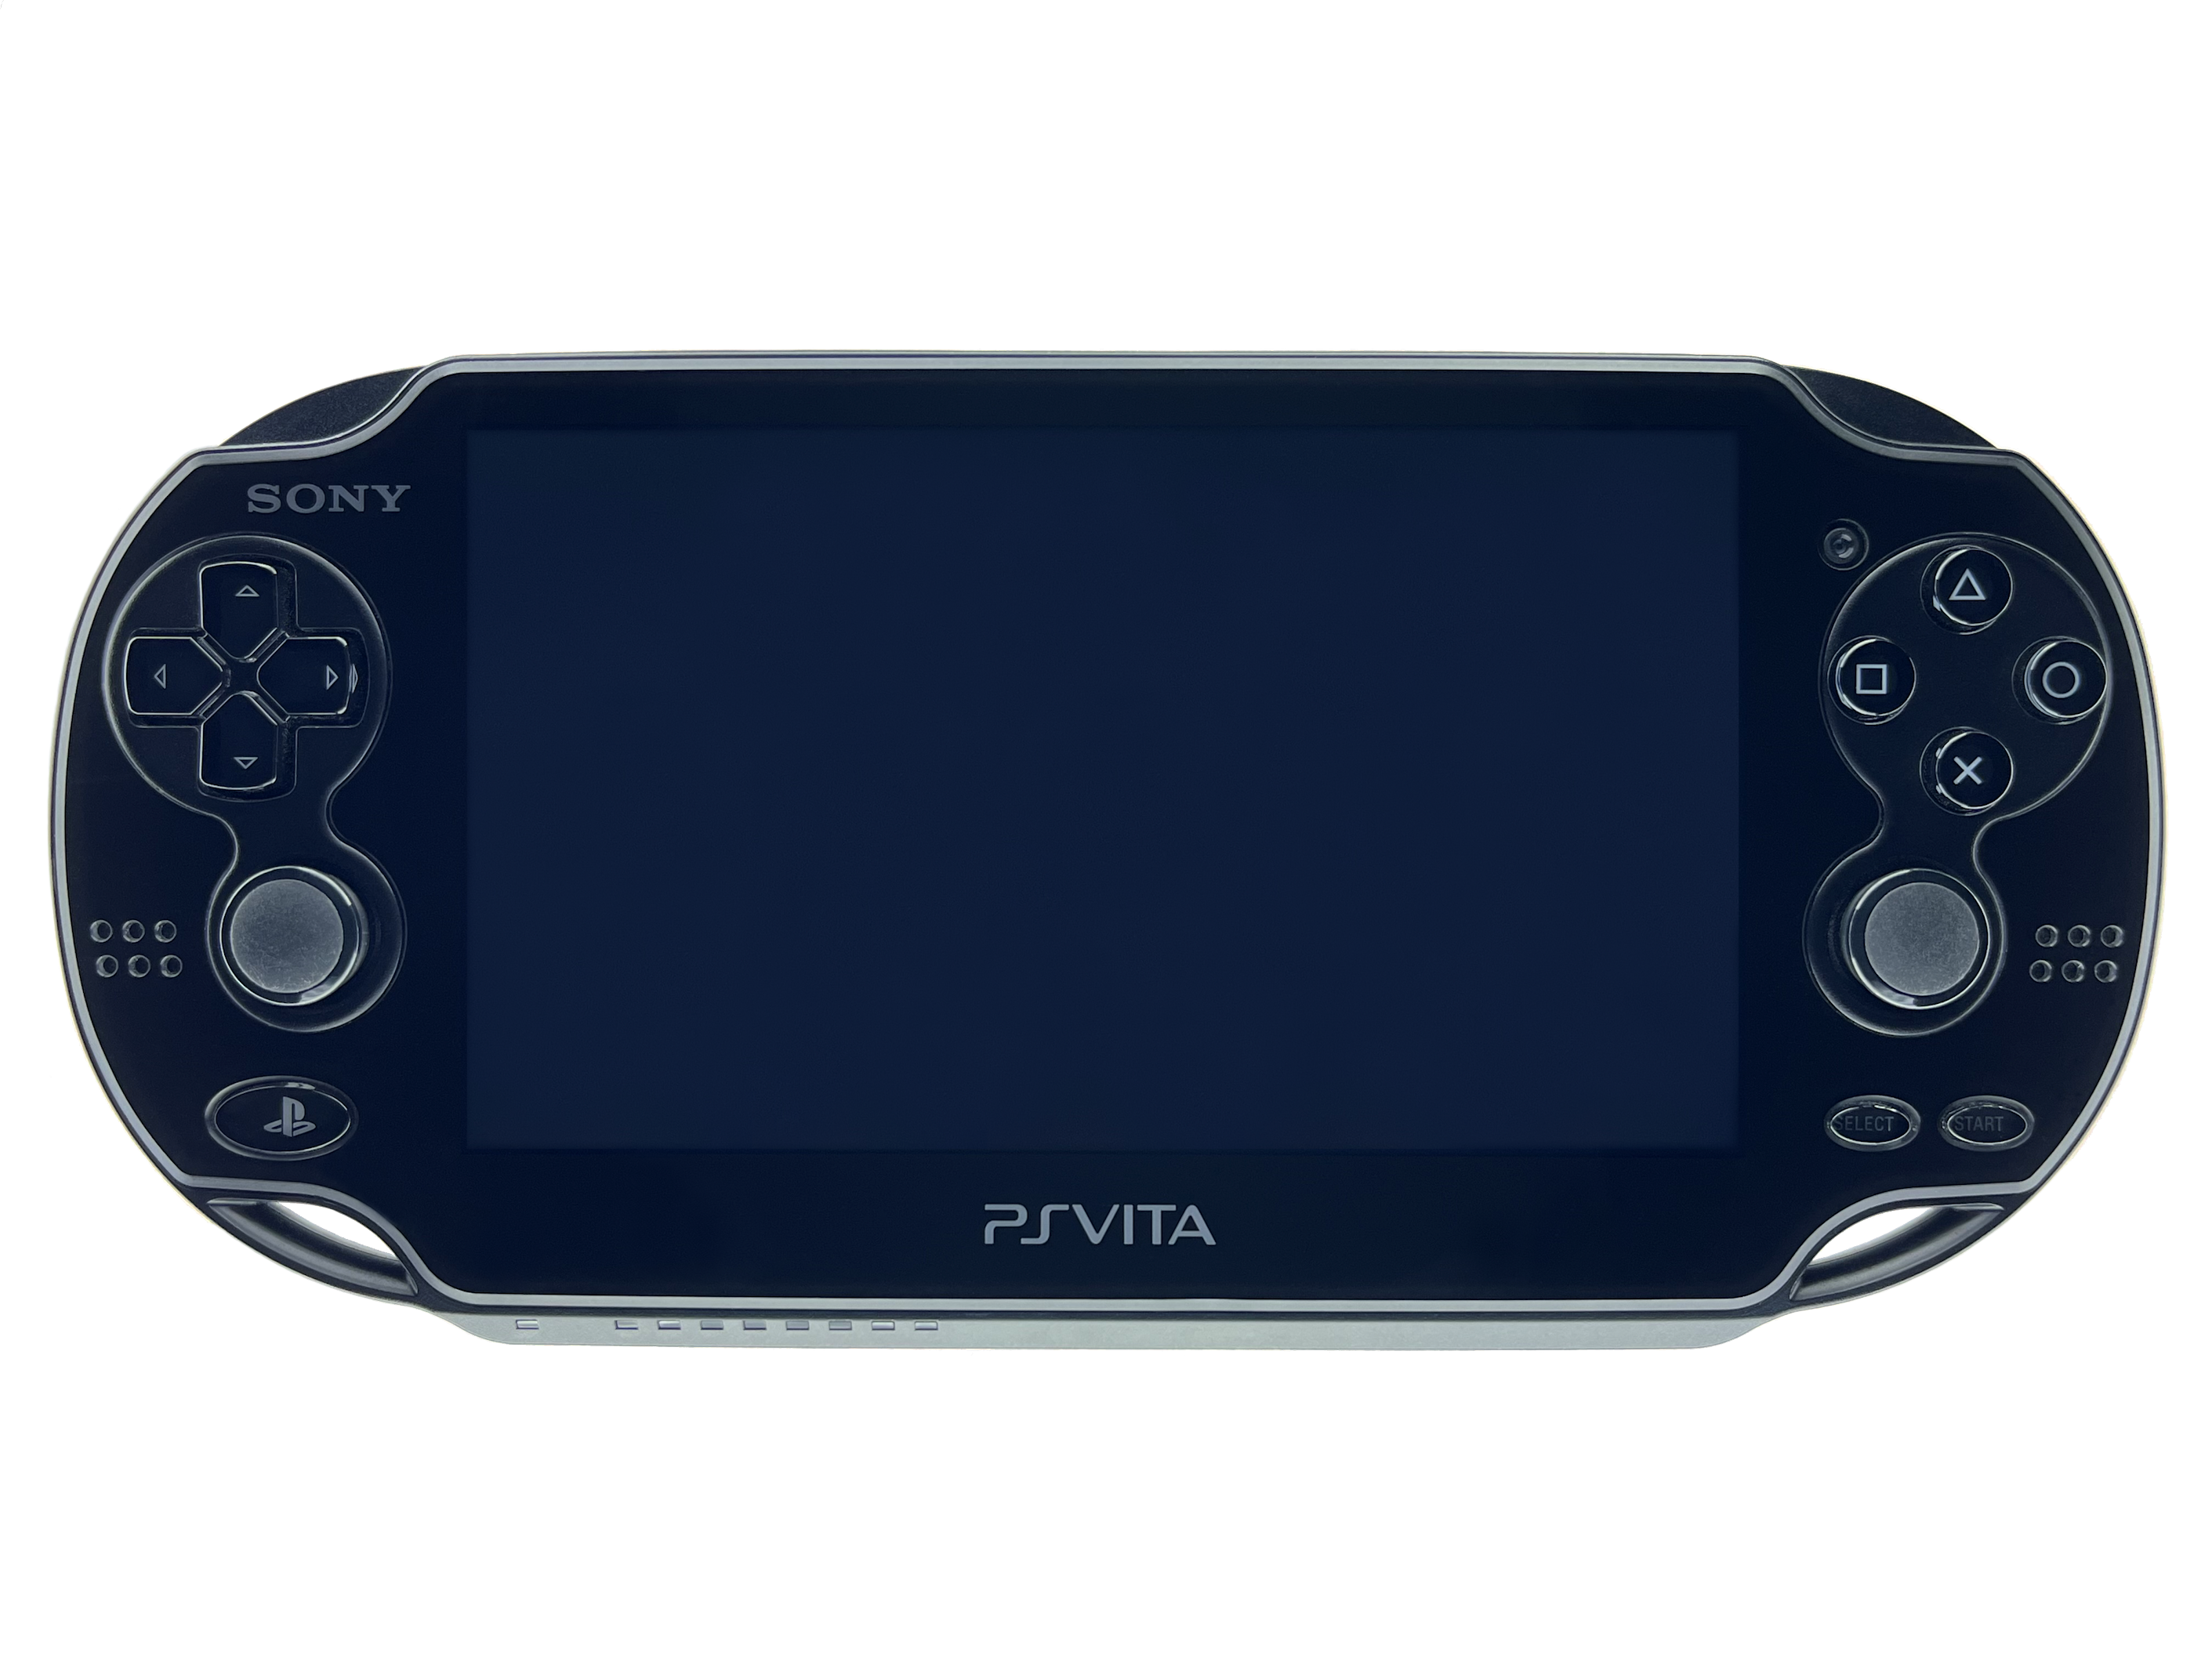  Sony PS Vita DEM-3000R Prototype Development Kit